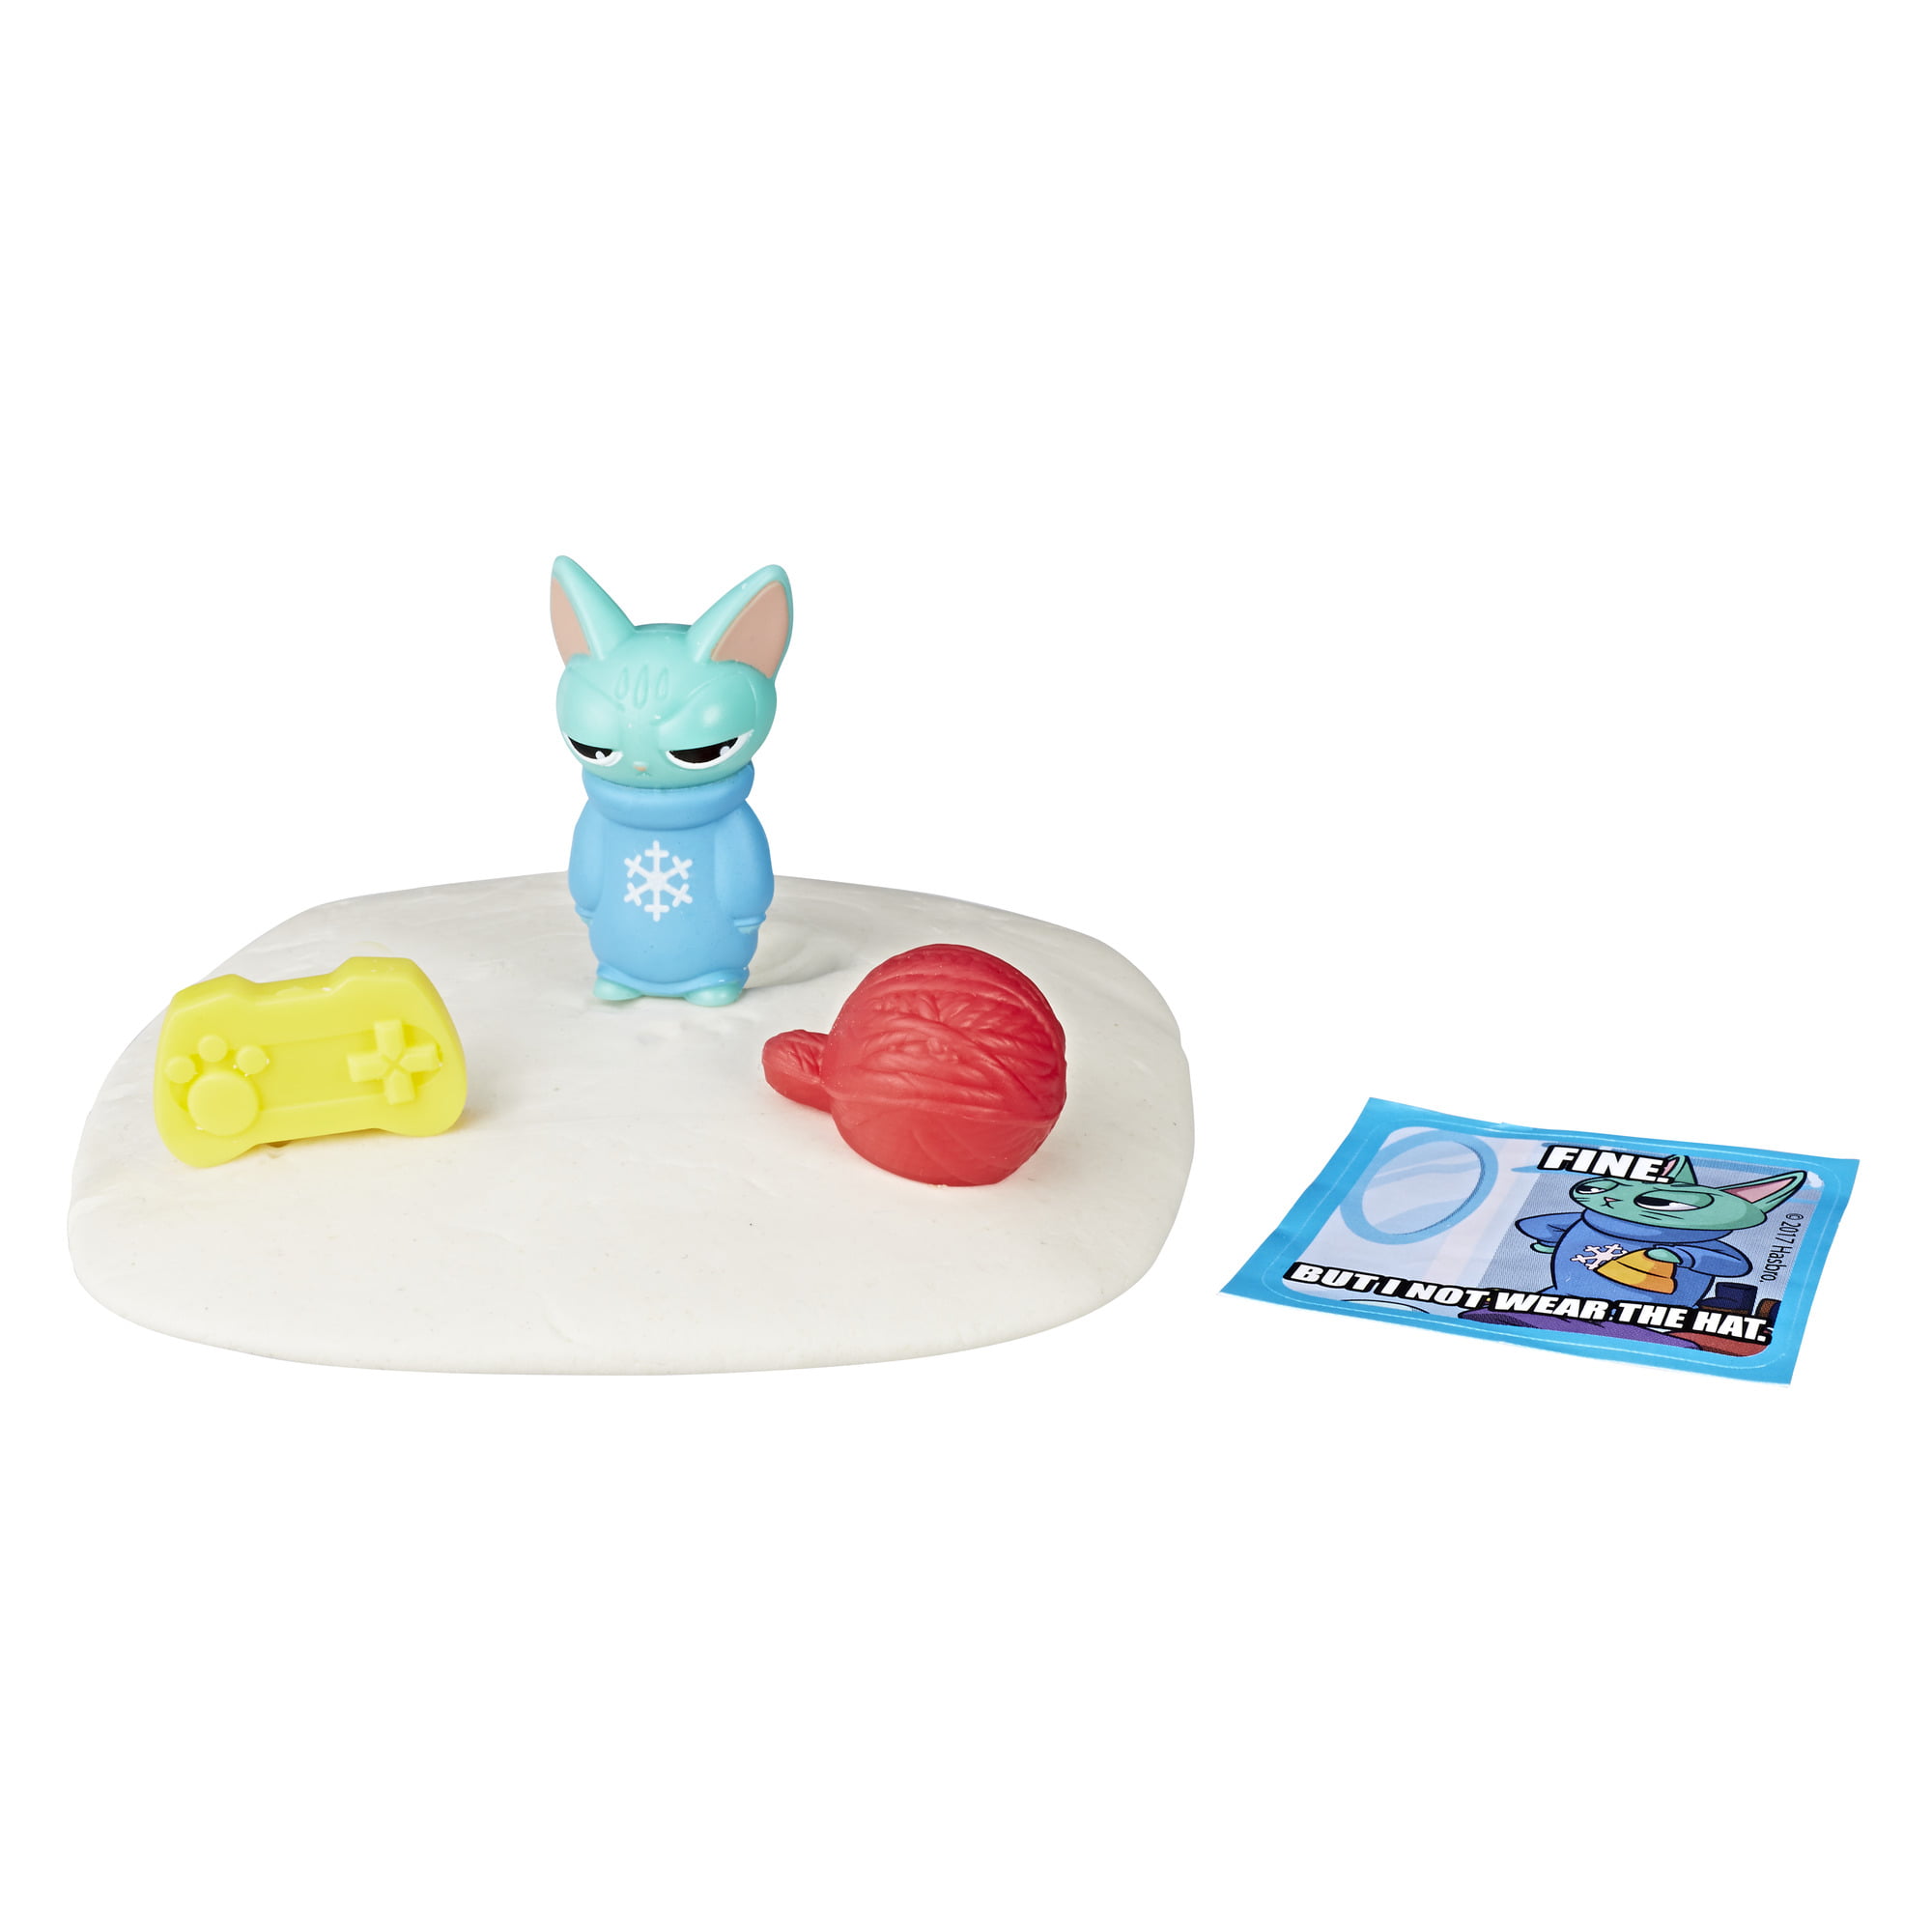  Lost Kitties Blind Box Assortment - E4459 : Toys & Games